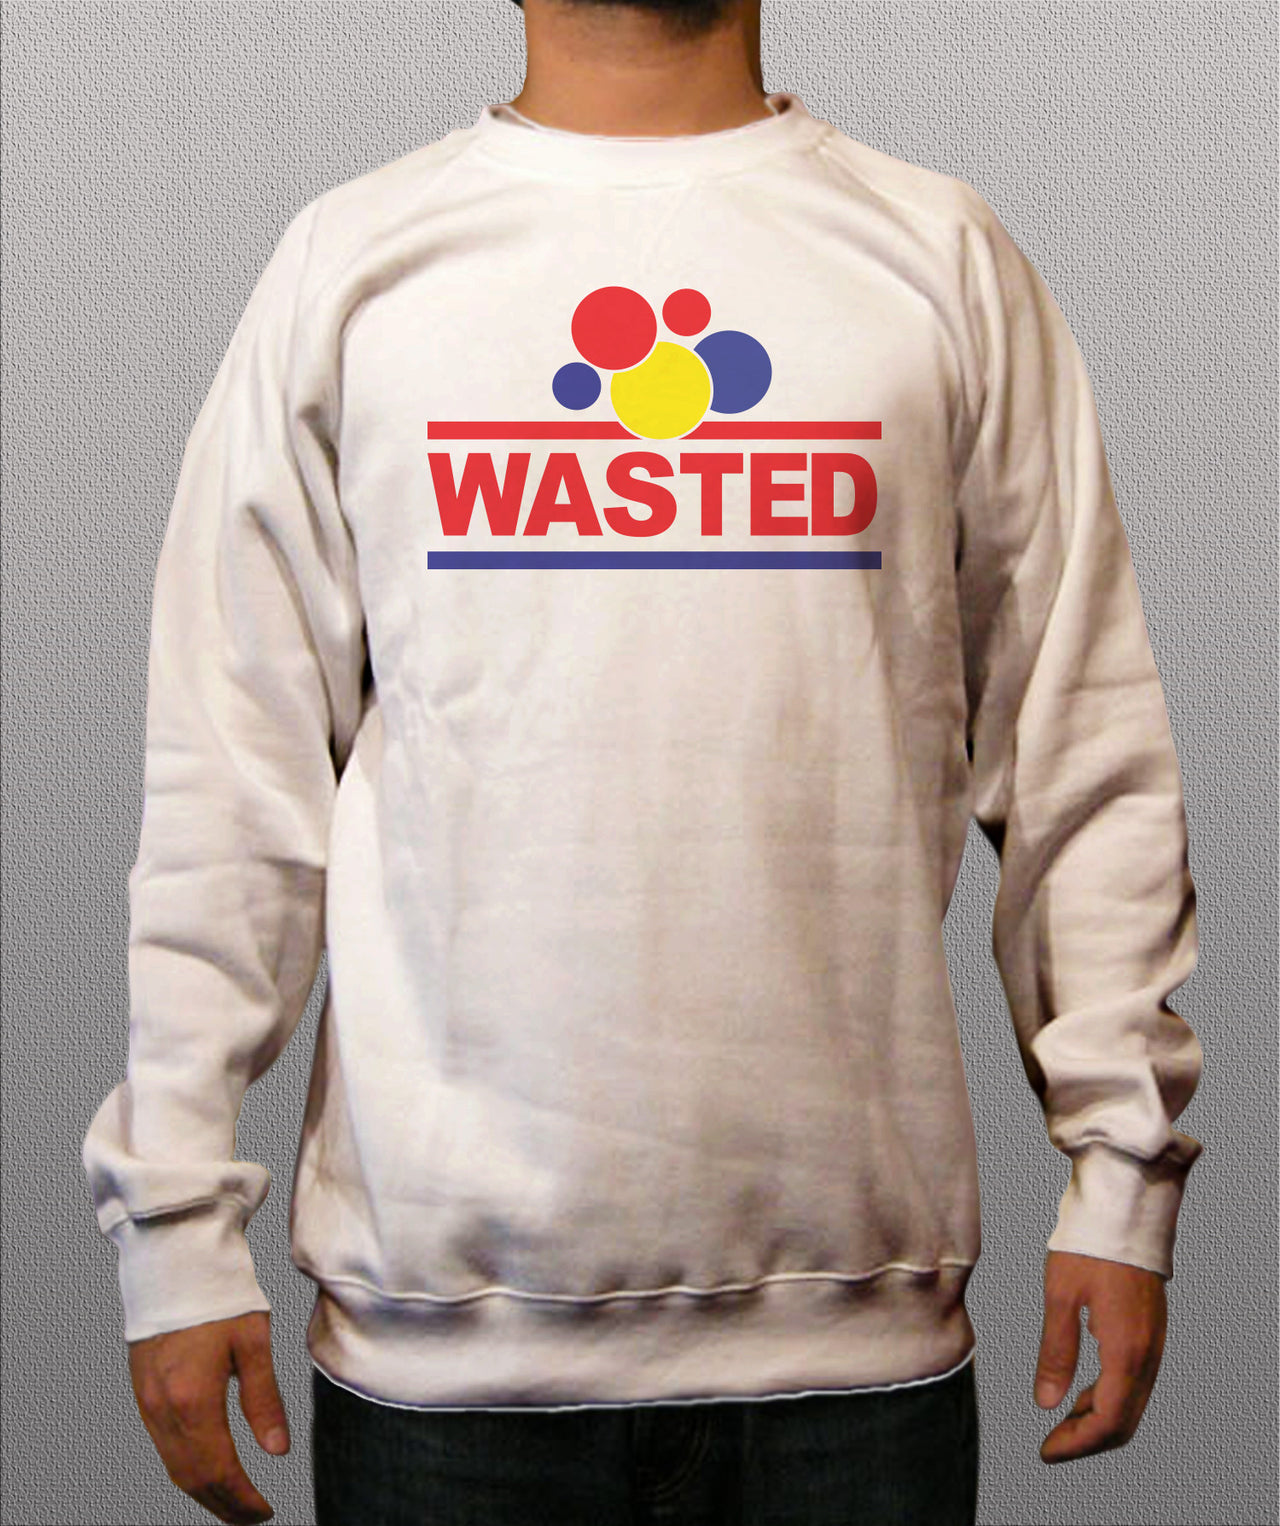 Wasted White Crewneck Sweatshirt - TshirtNow.net - 1